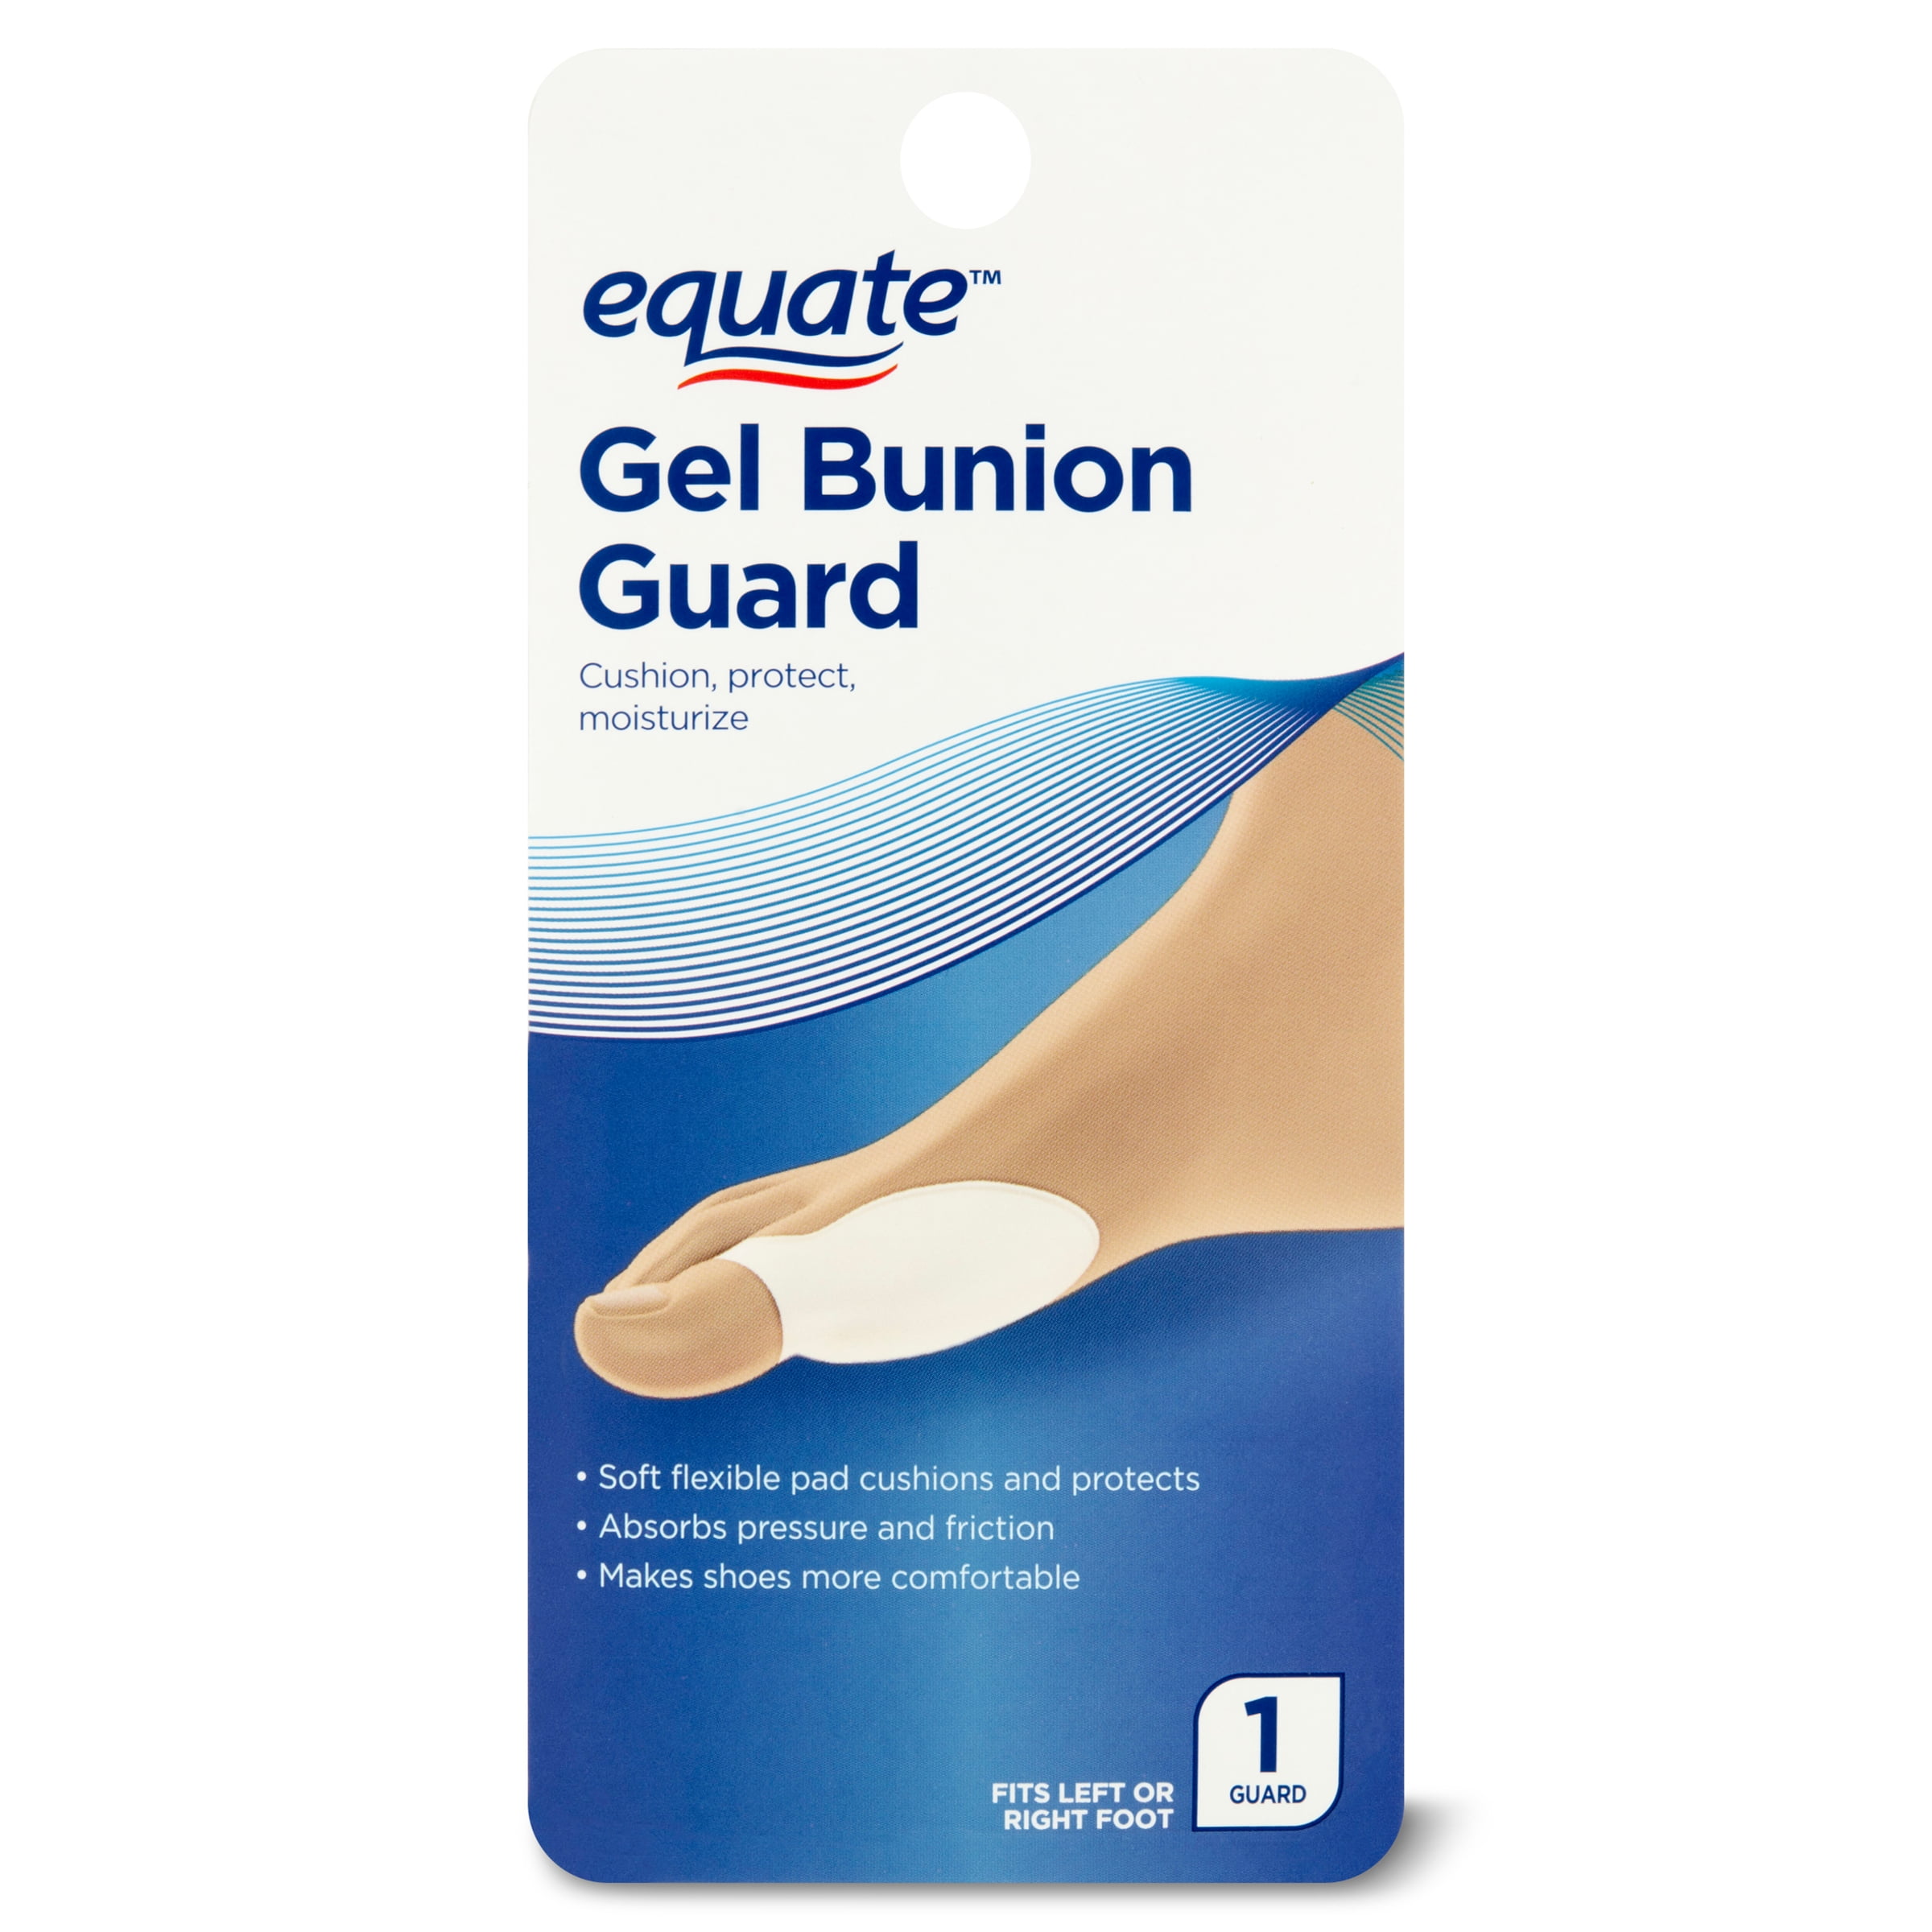 Equate Gel Bunion Guard